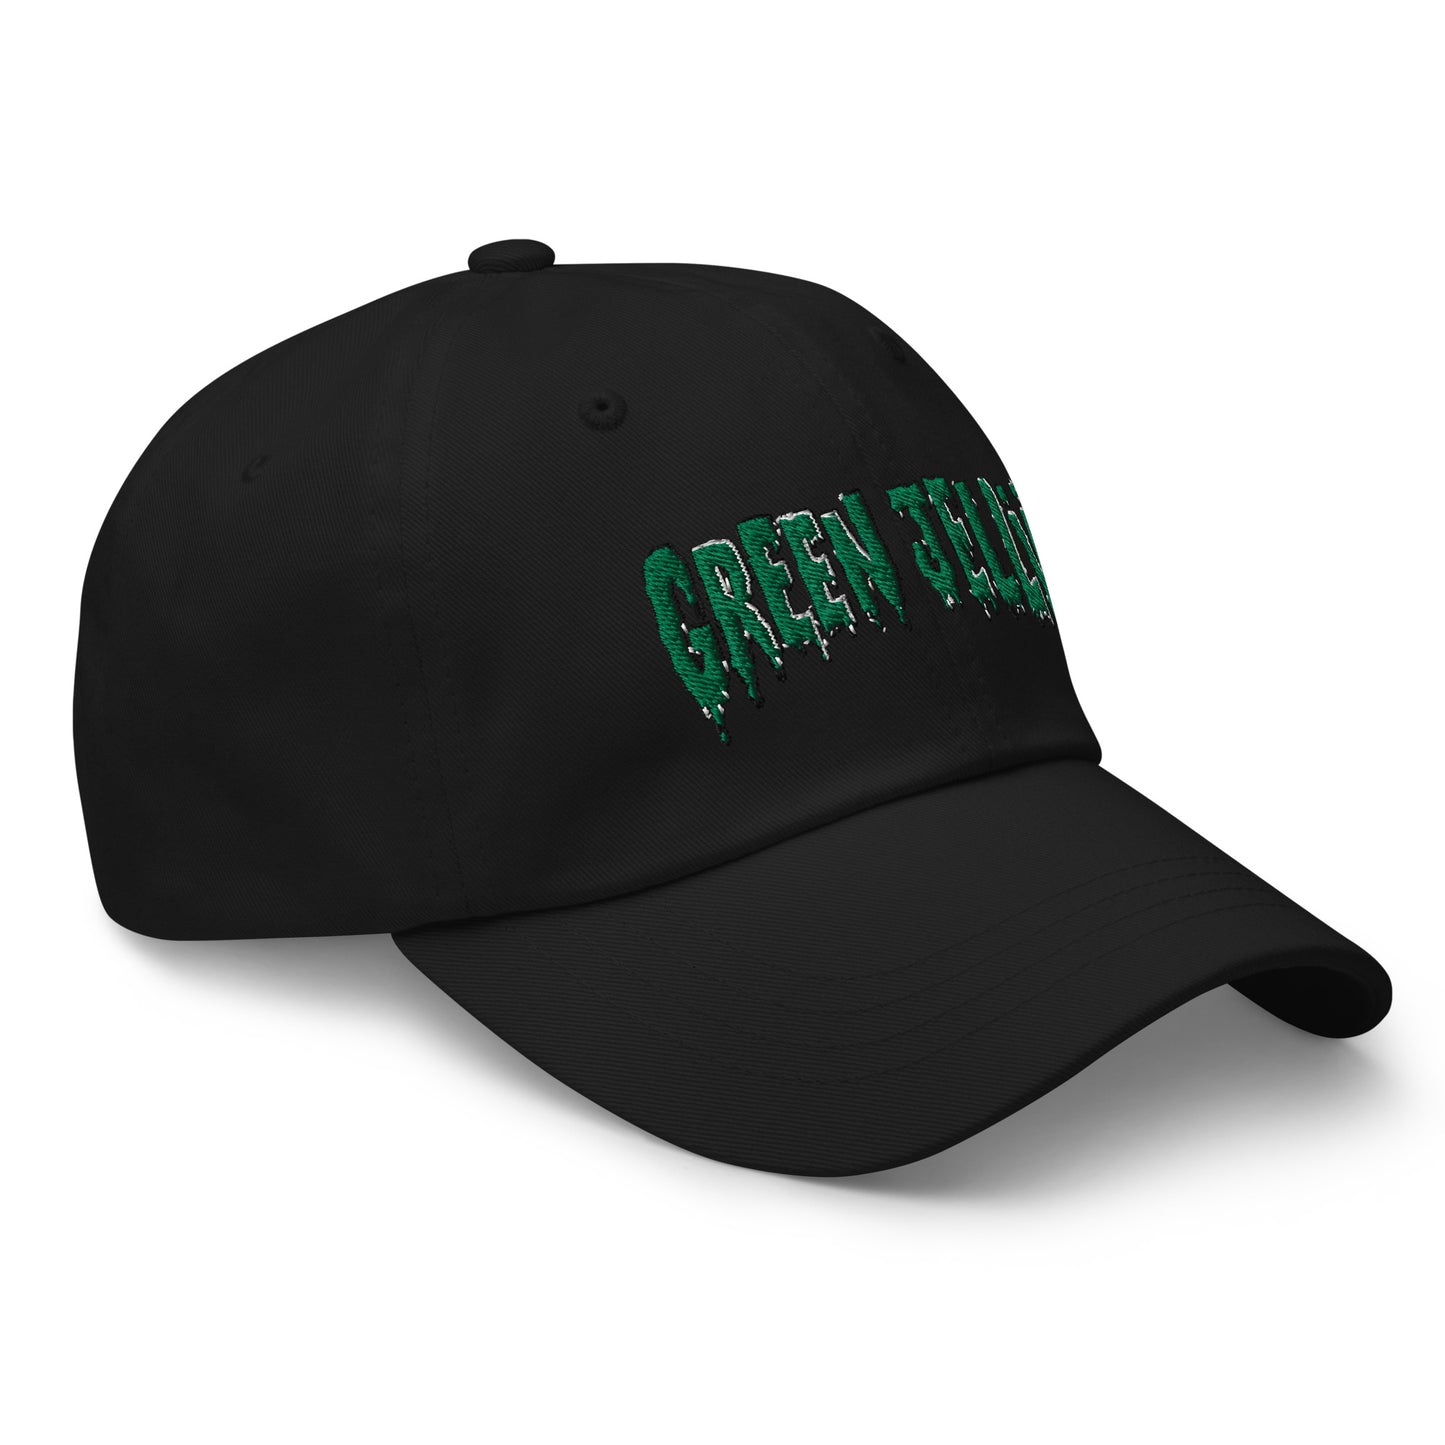 Green Jellÿ - Dad hat